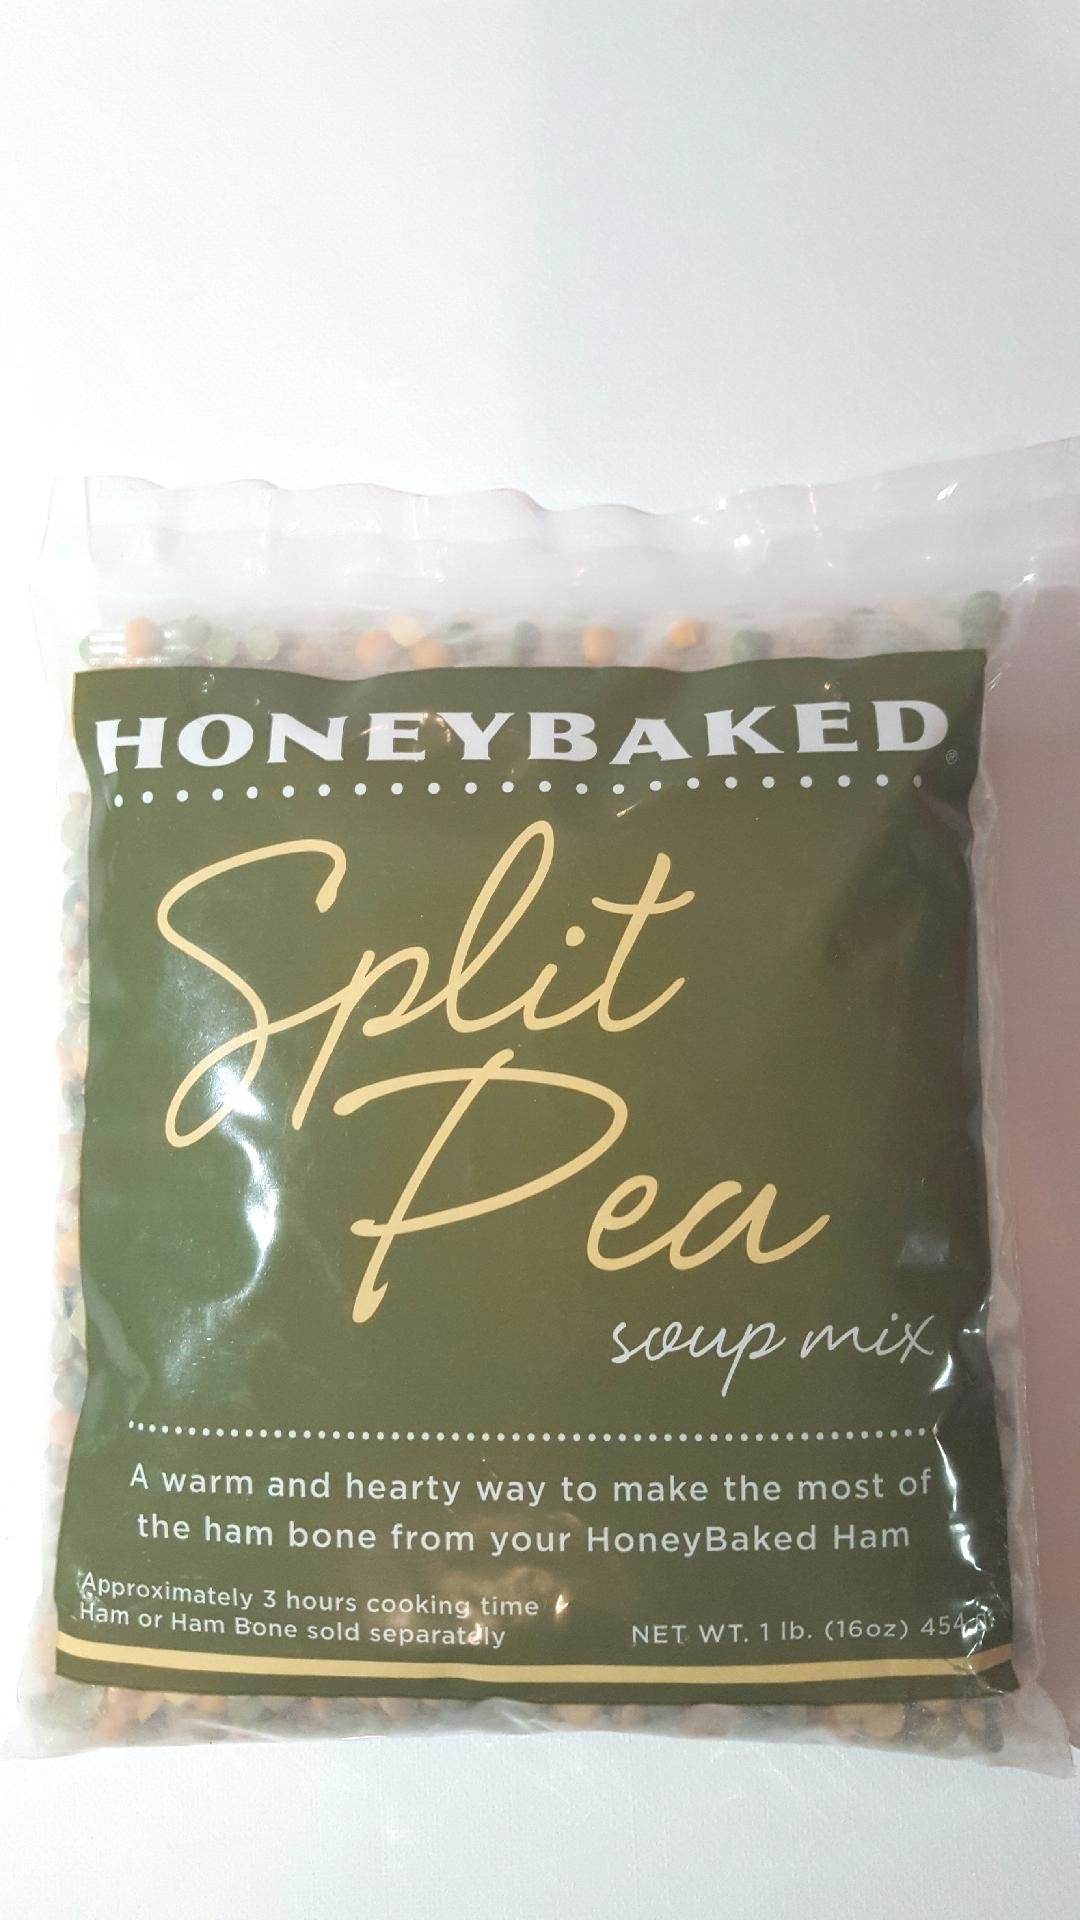 Honey Baked Ham Split Pea Soup Mix 16 oz